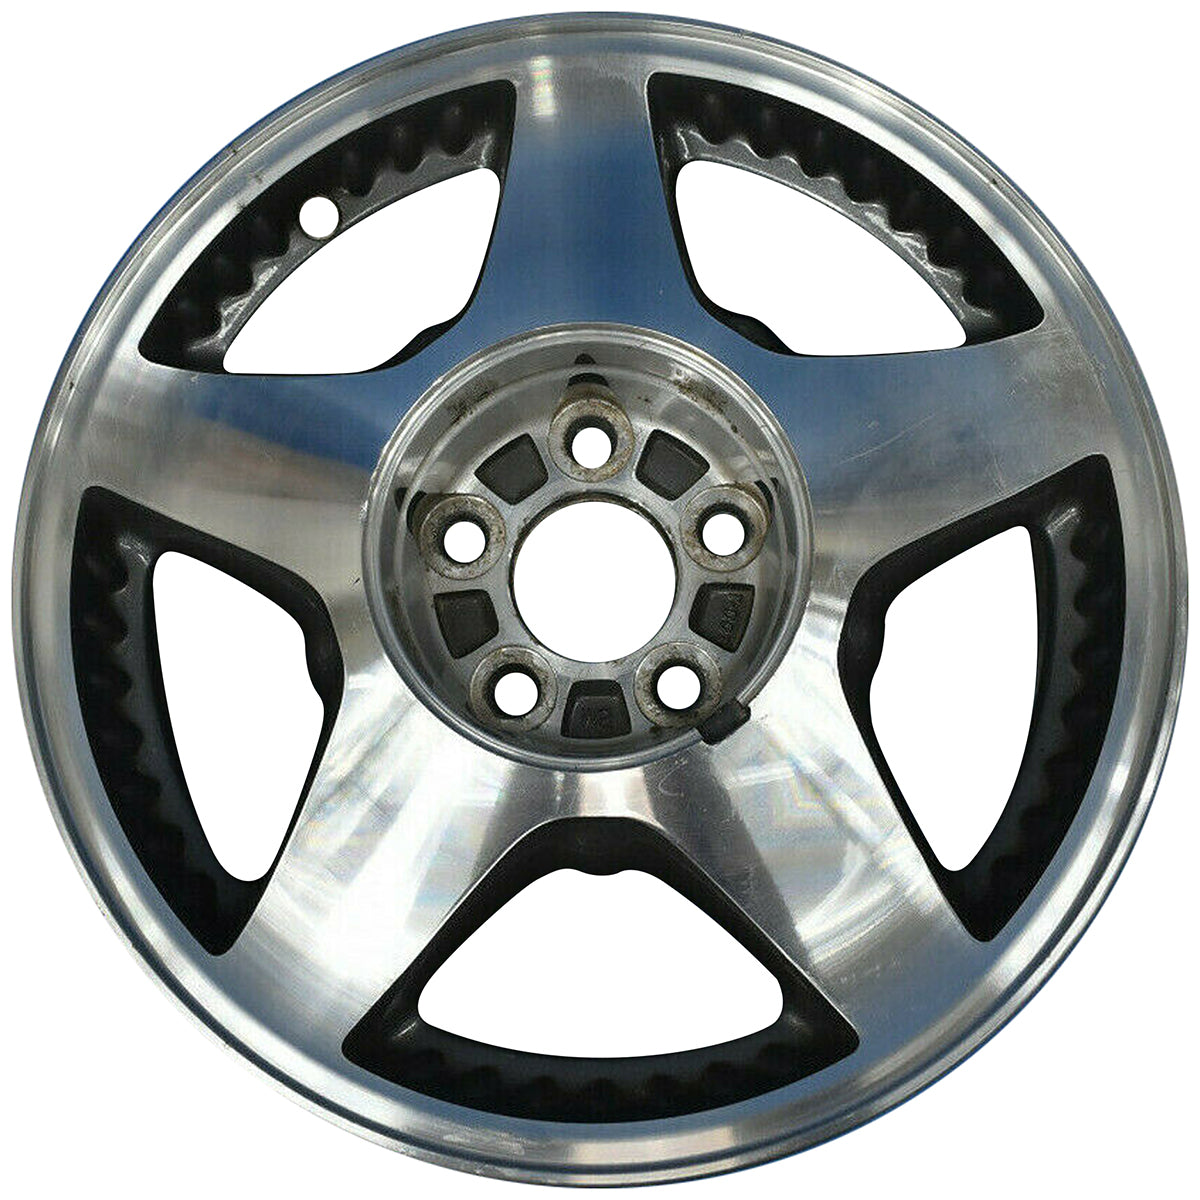 2002 Ford Windstar 16" OEM Wheel Rim W3565US